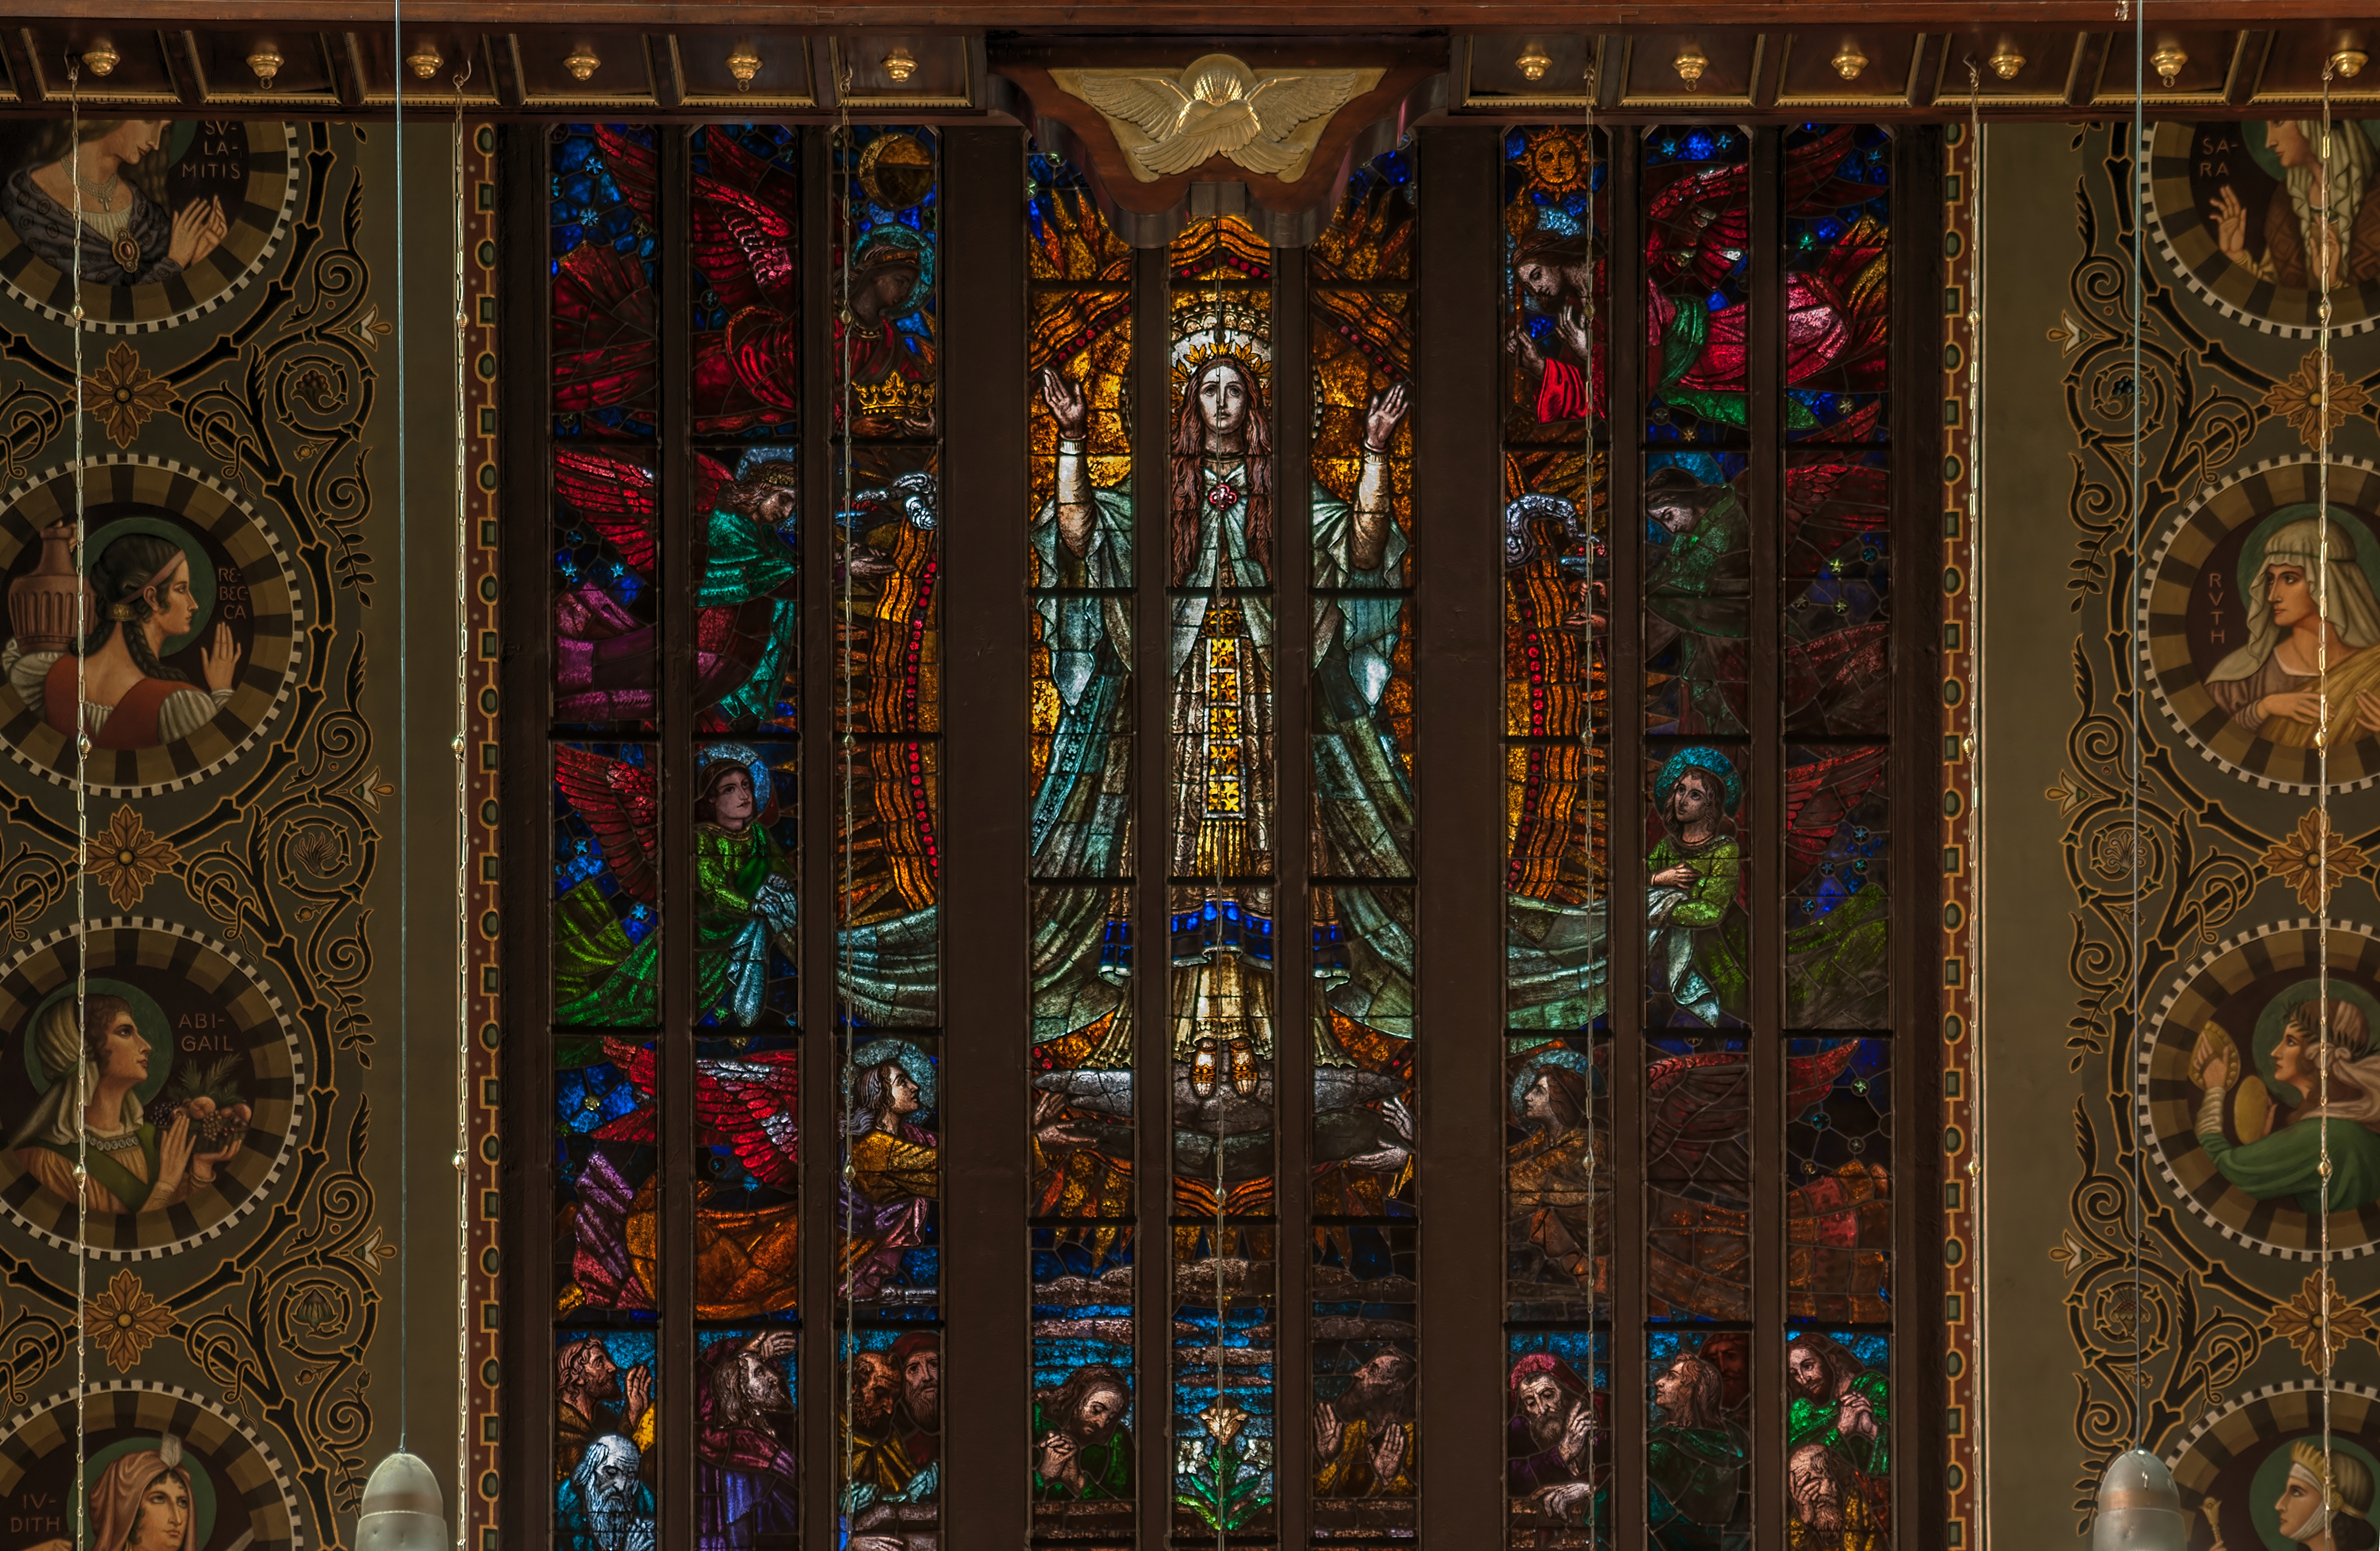 Stained glass windows in São Bento Monastery, São Paulo, Brazil